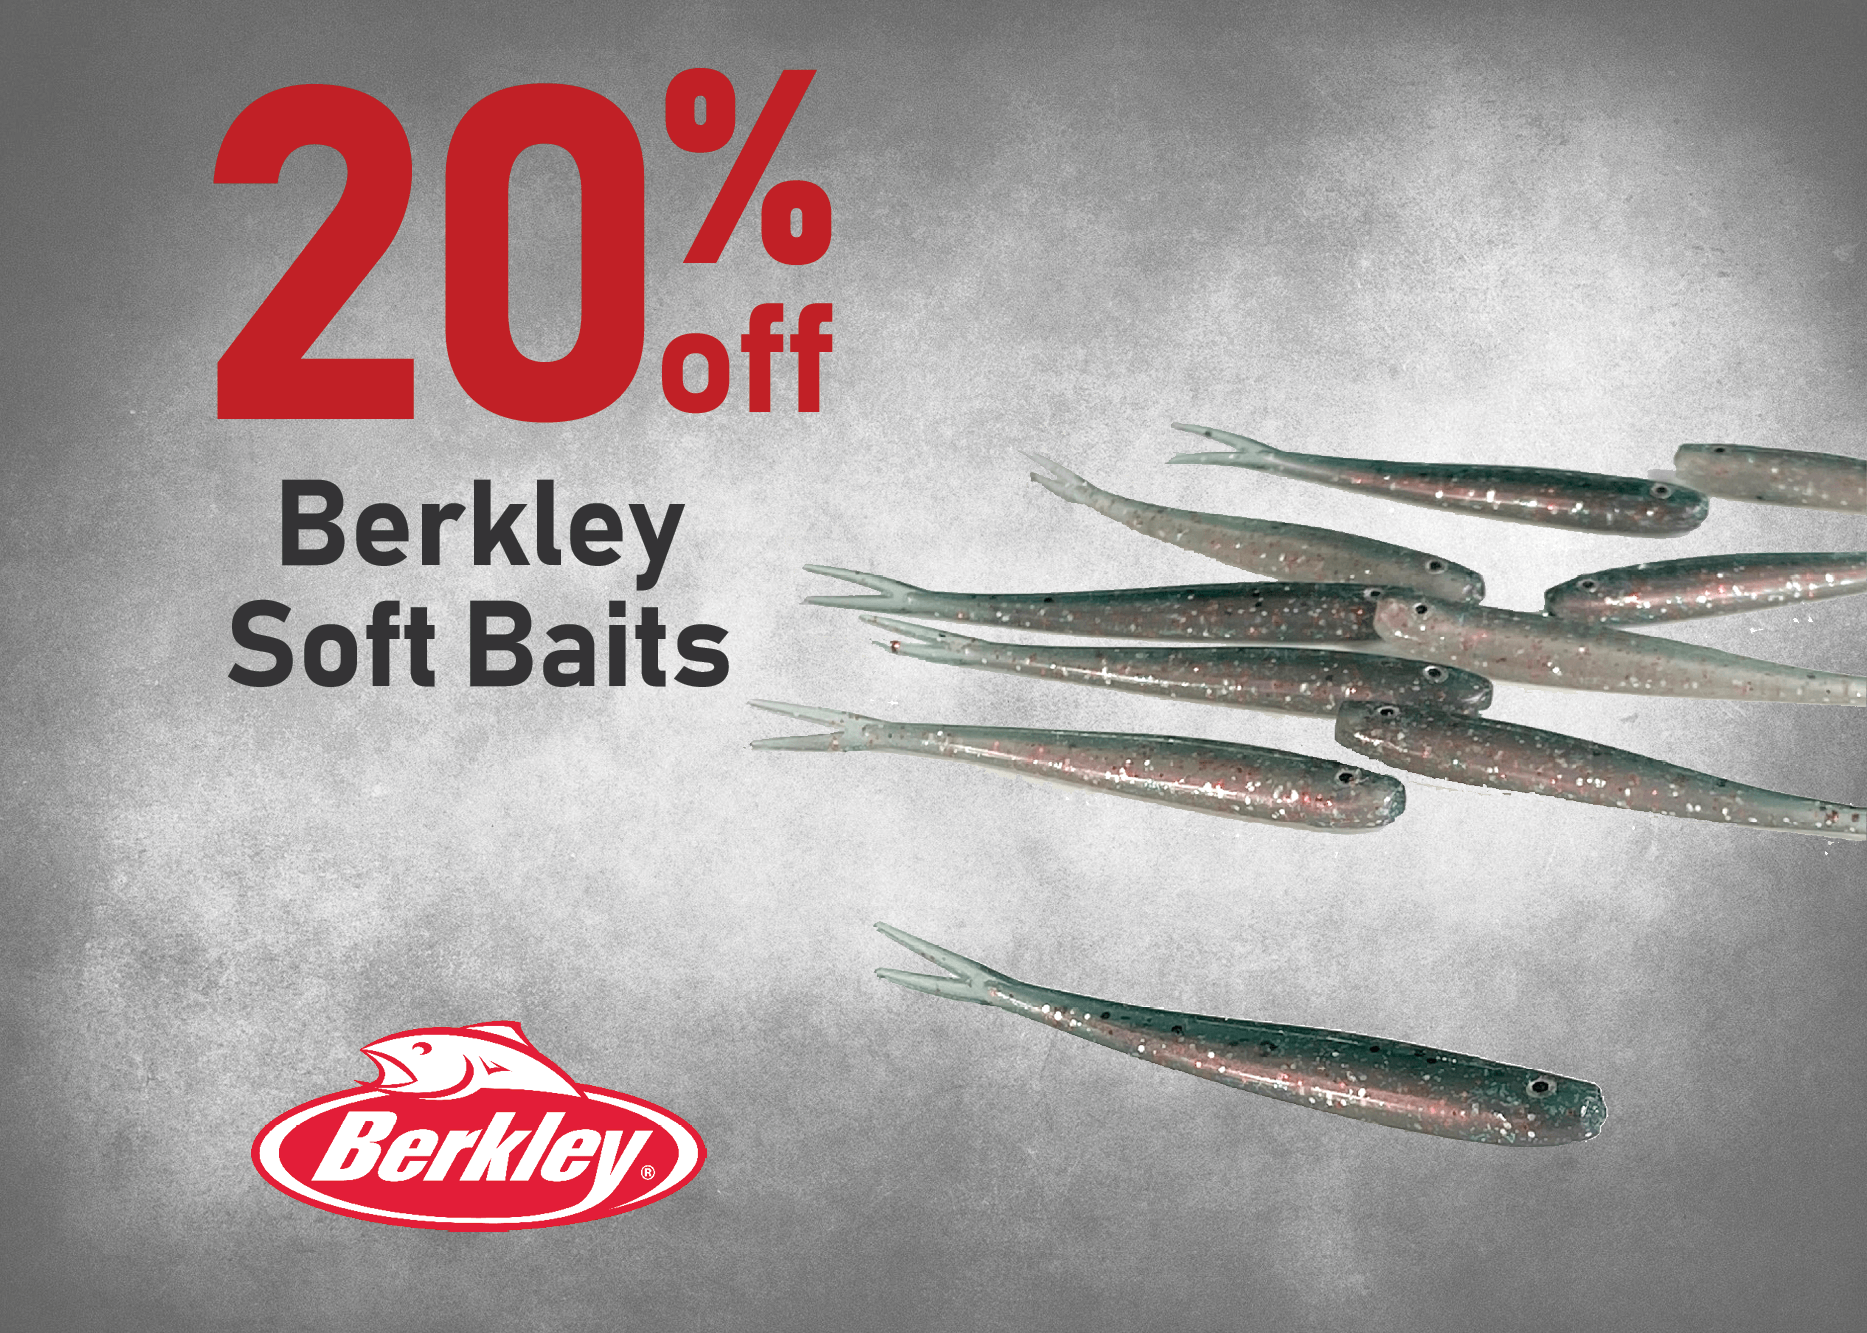 Save 20% on Berkley Soft Baits